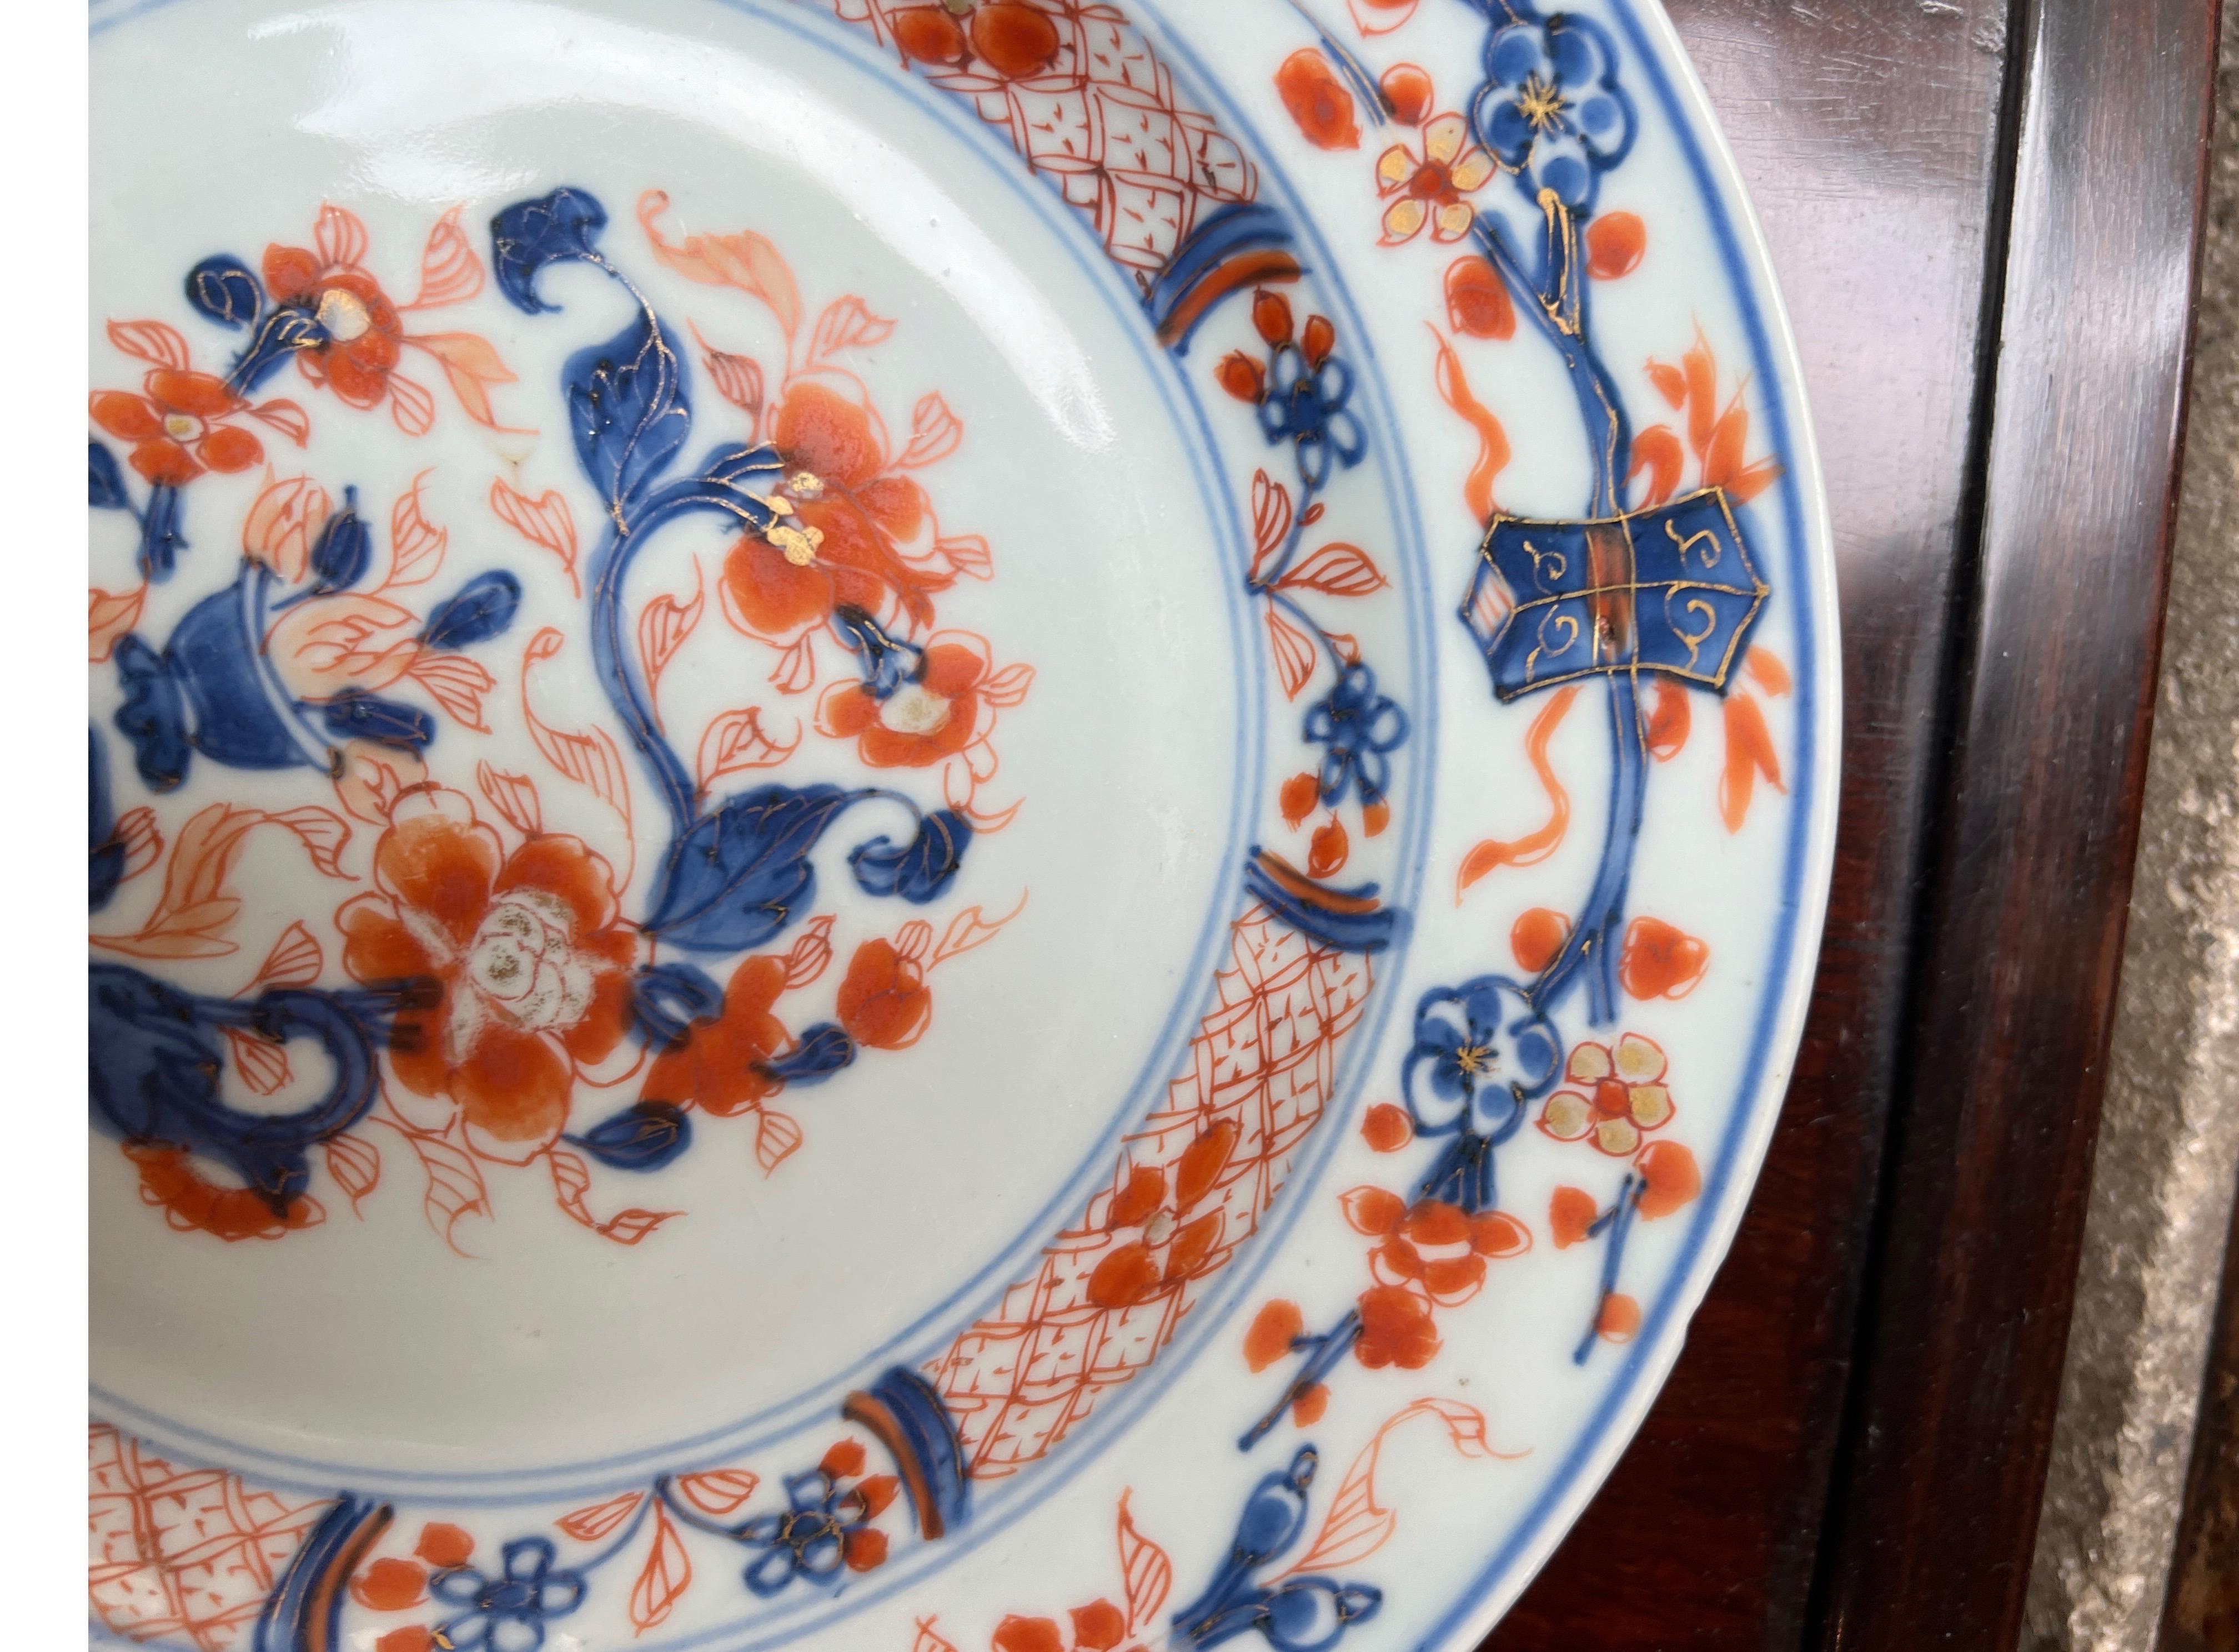 China, 18th Century Chinese Export Imari Porcelain Plate with vase pattern 1710 5